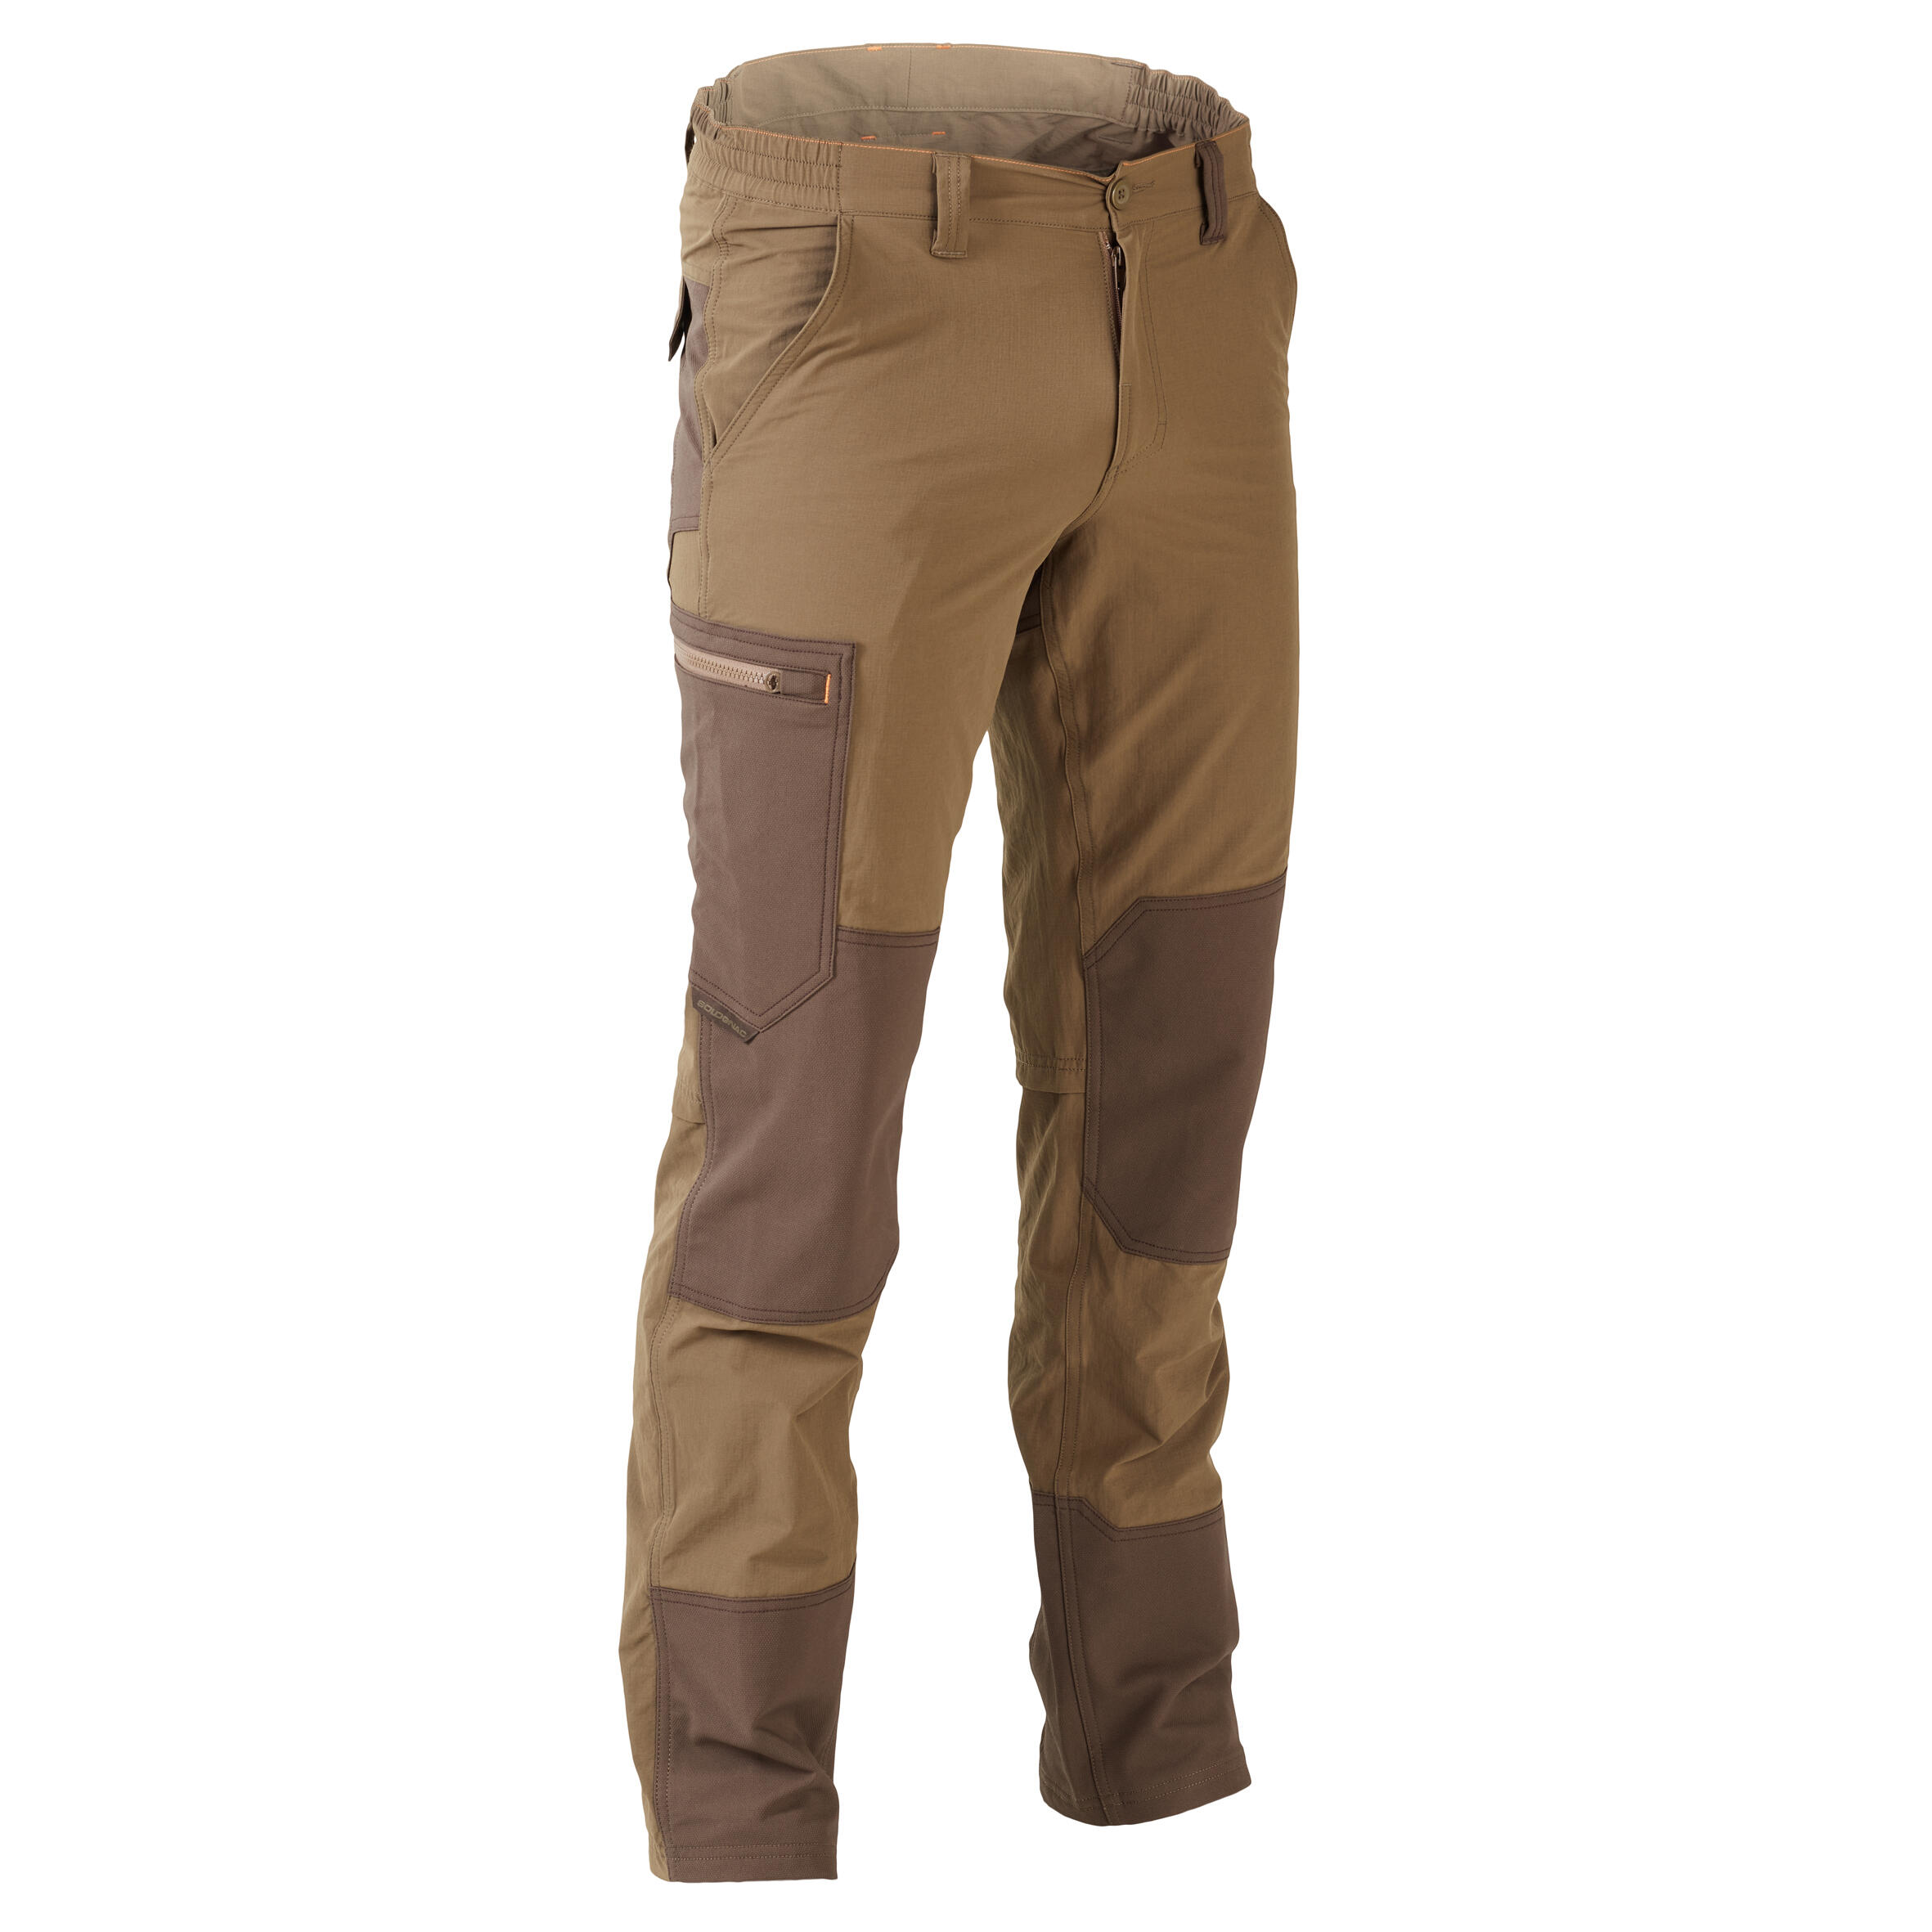 Pantalon 520 Respirant, ușor și Rezistent Maro bărbați La Oferta Online decathlon imagine La Oferta Online